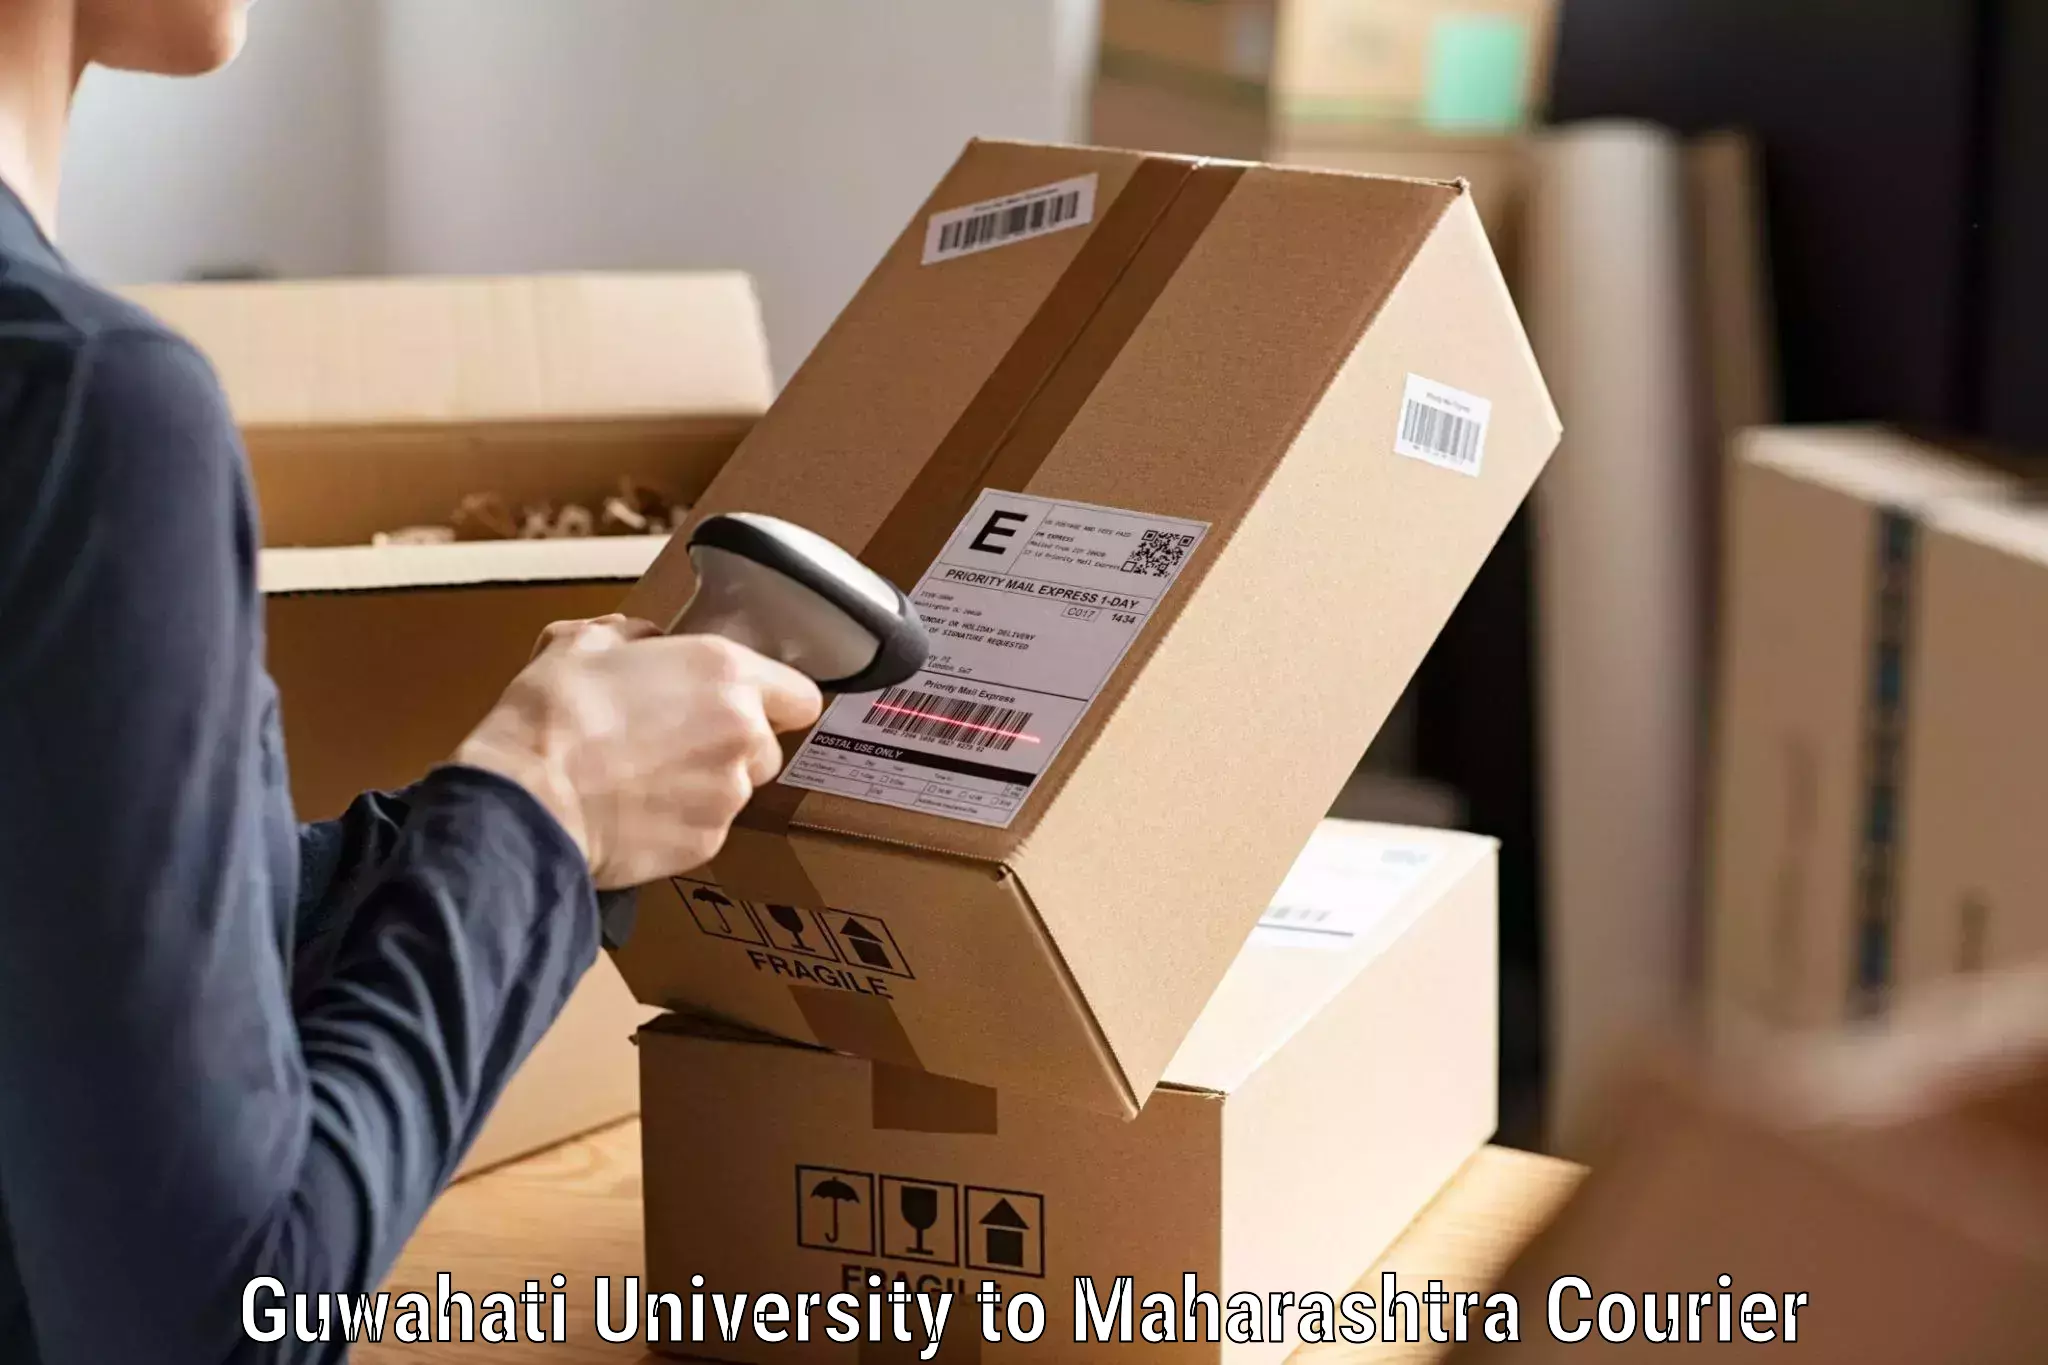 Affordable parcel service Guwahati University to Buldhana